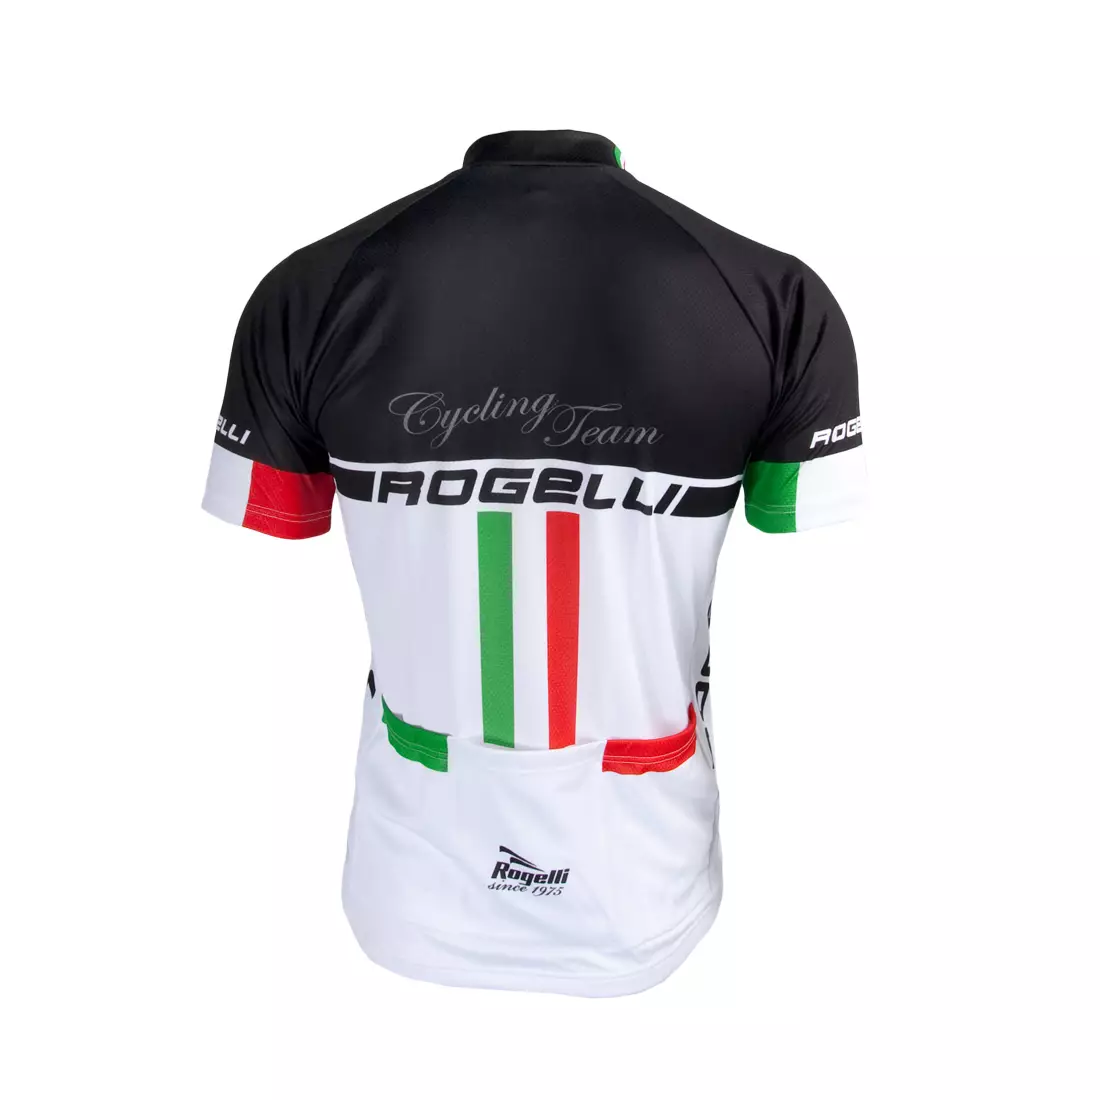 ROGELLI - CYCLING TEAM - men's cycling jersey